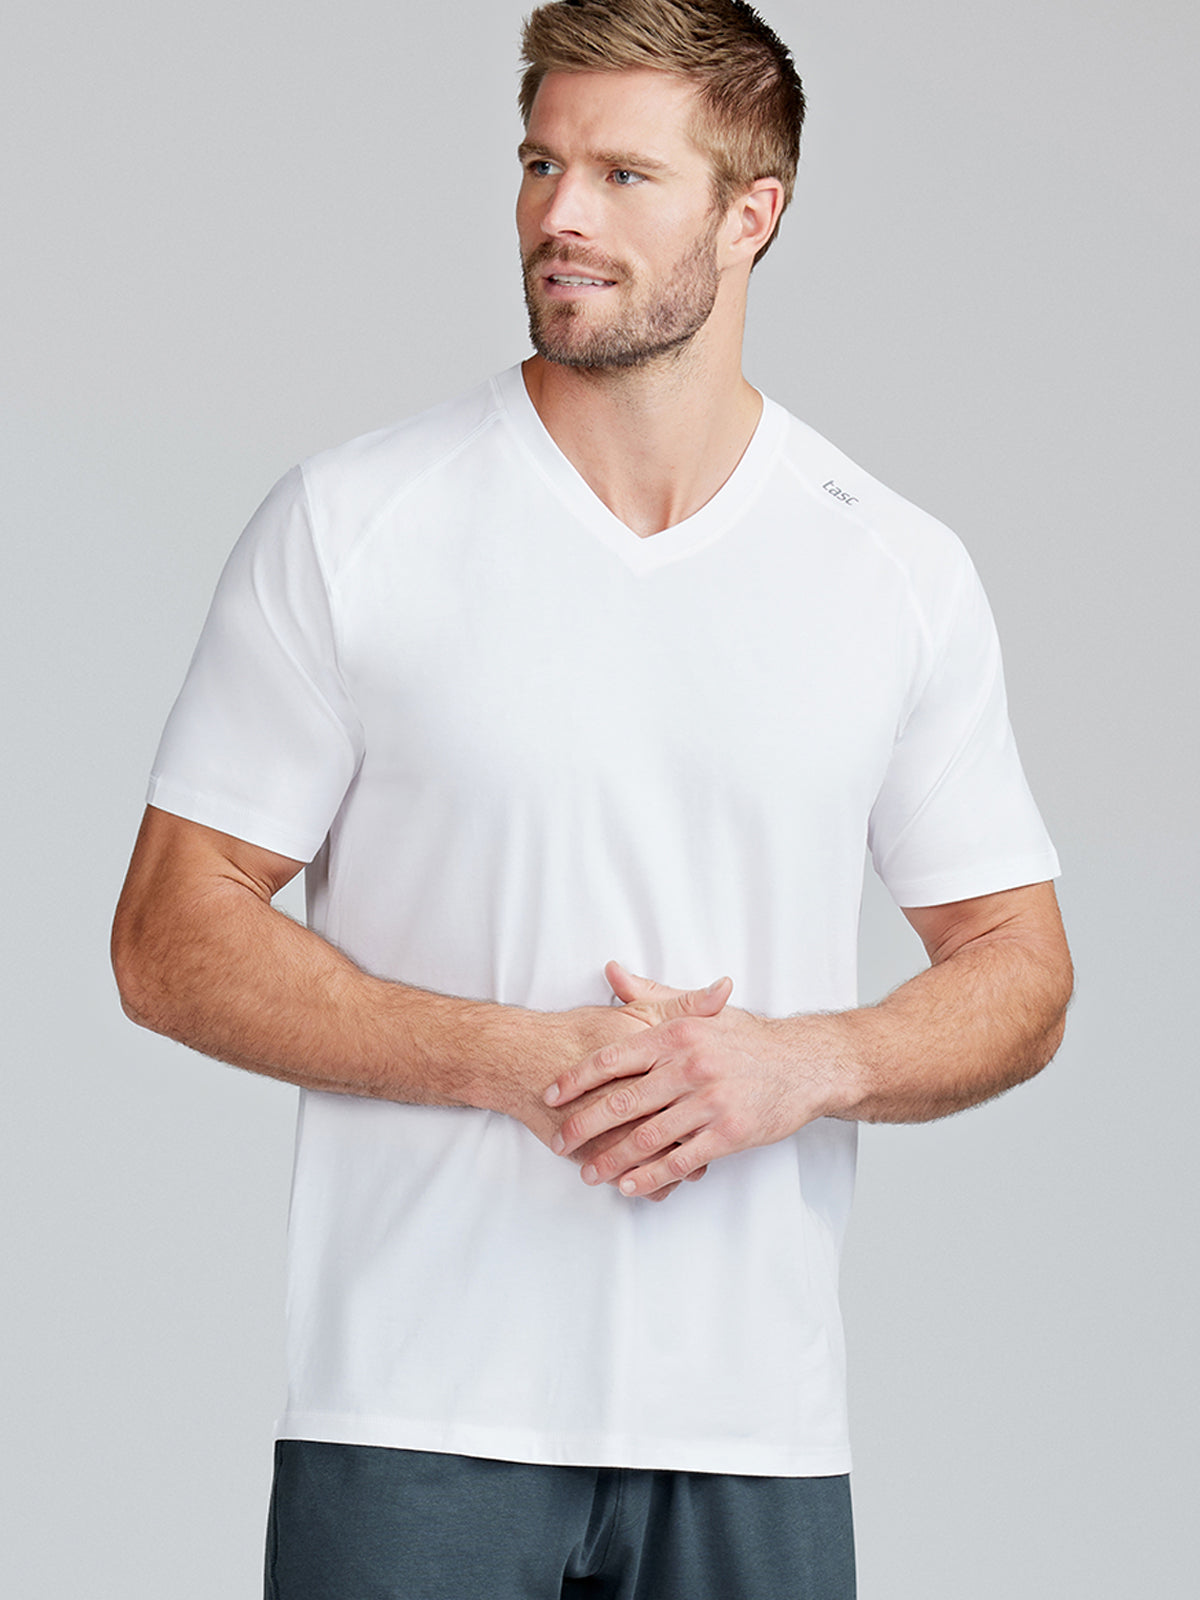 Men's Gym Clothes, Gym Tops, Shorts & T-Shirts